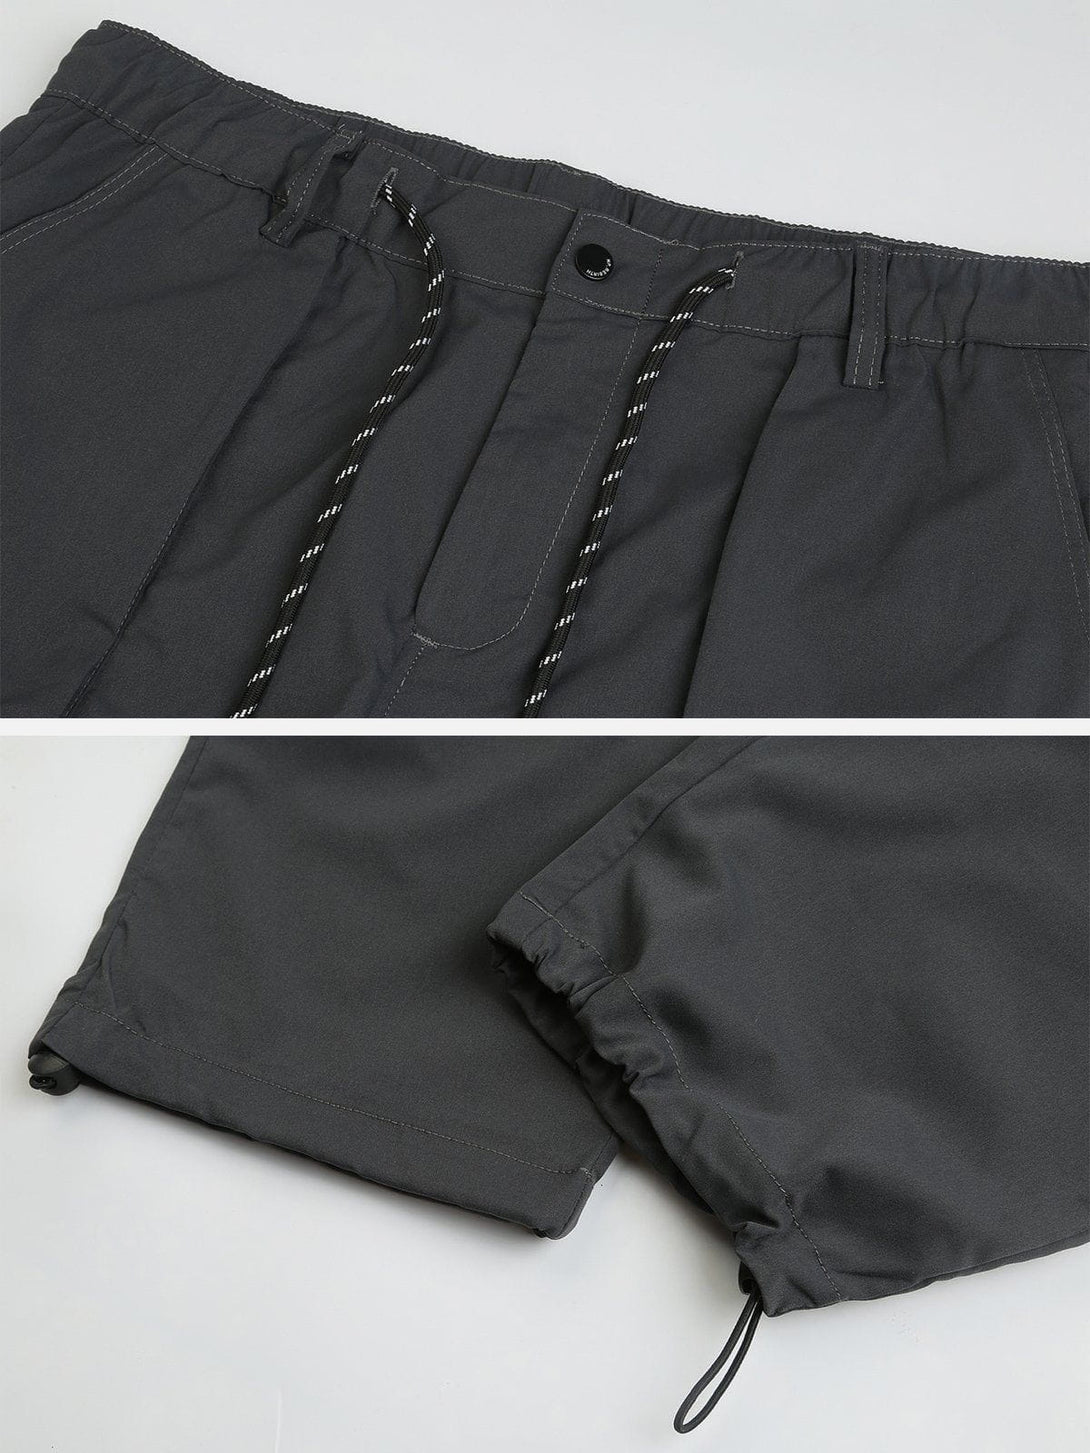 Majesda® - Functional Ribbon Cargo Pants outfit ideas streetwear fashion